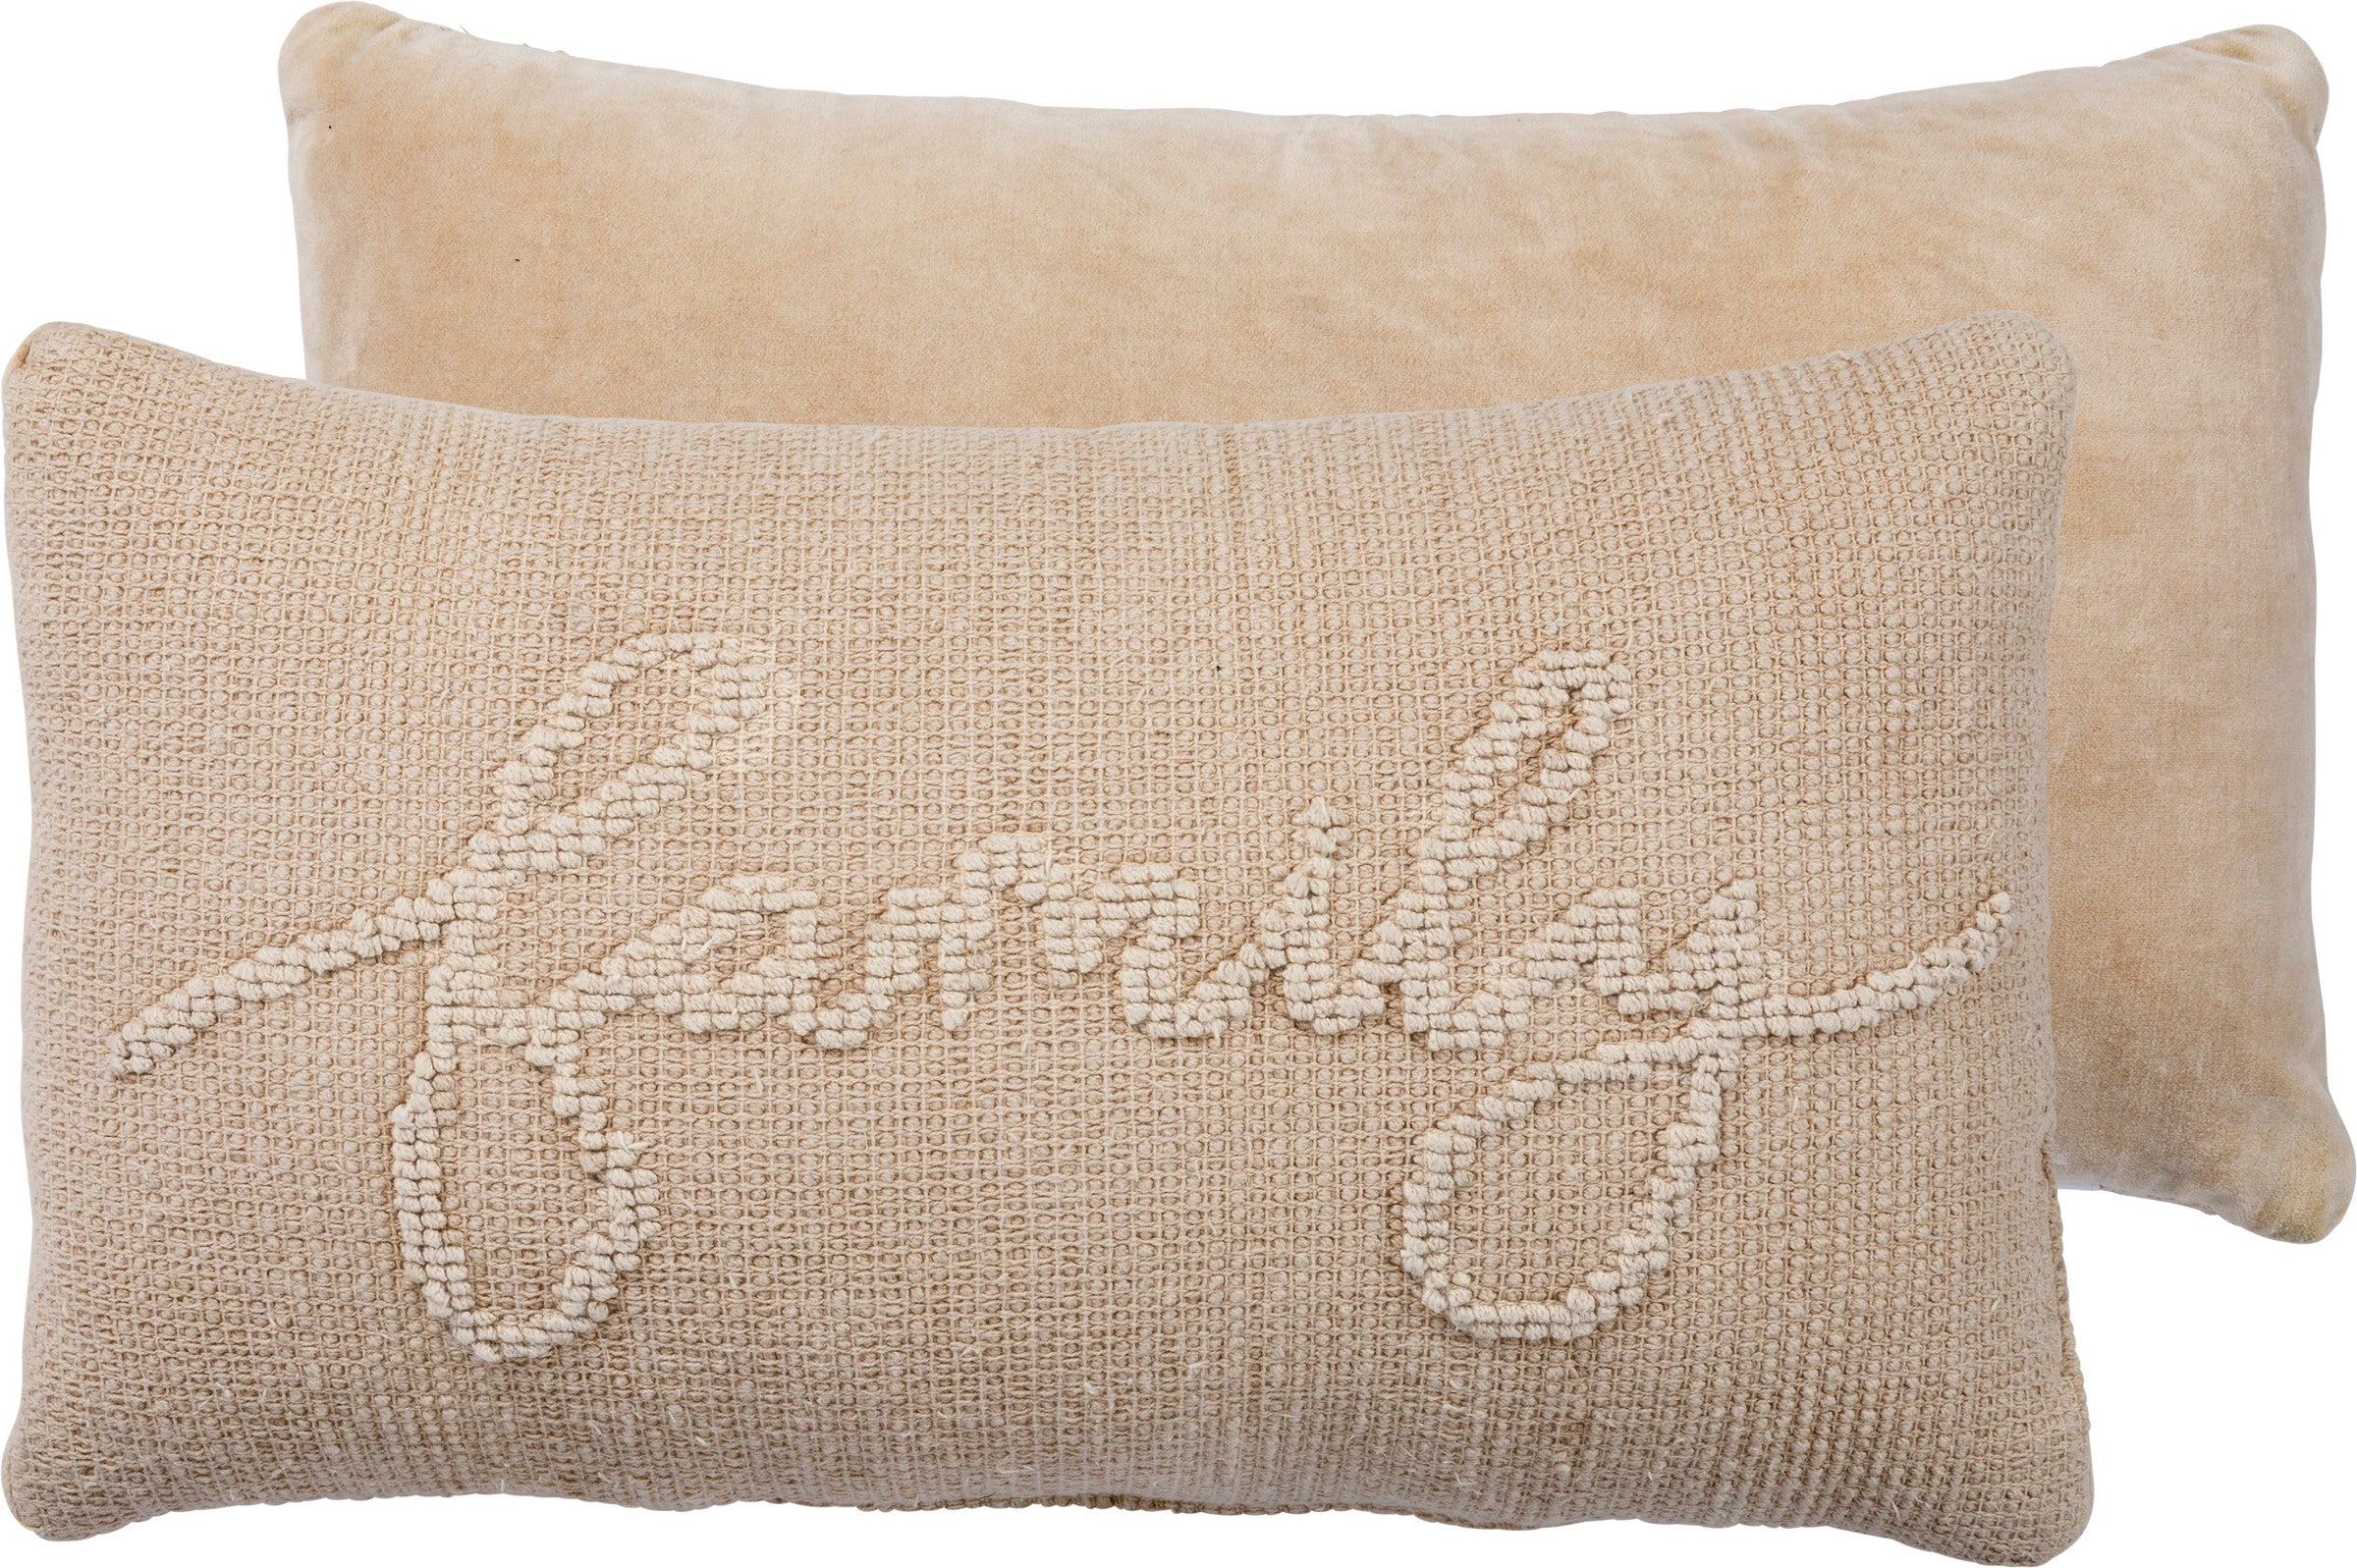 "Family" Knobby Pillow